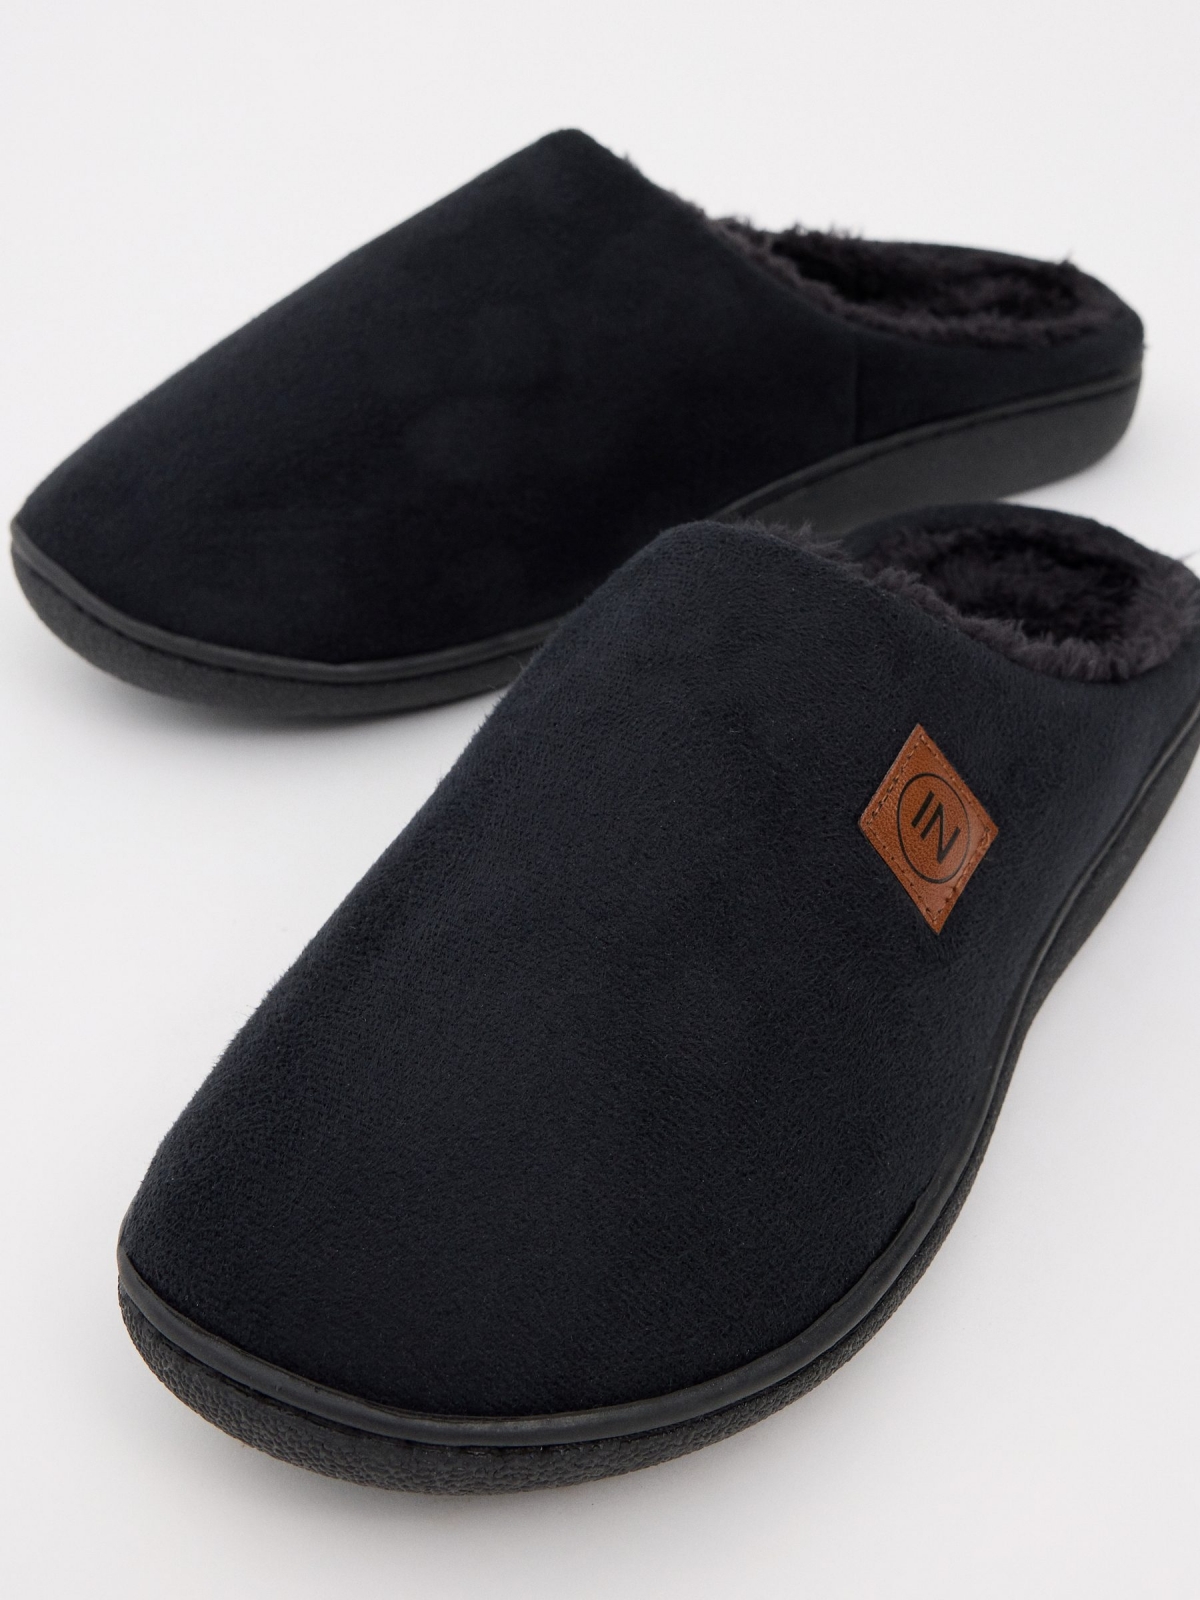 Black home slippers black detail view